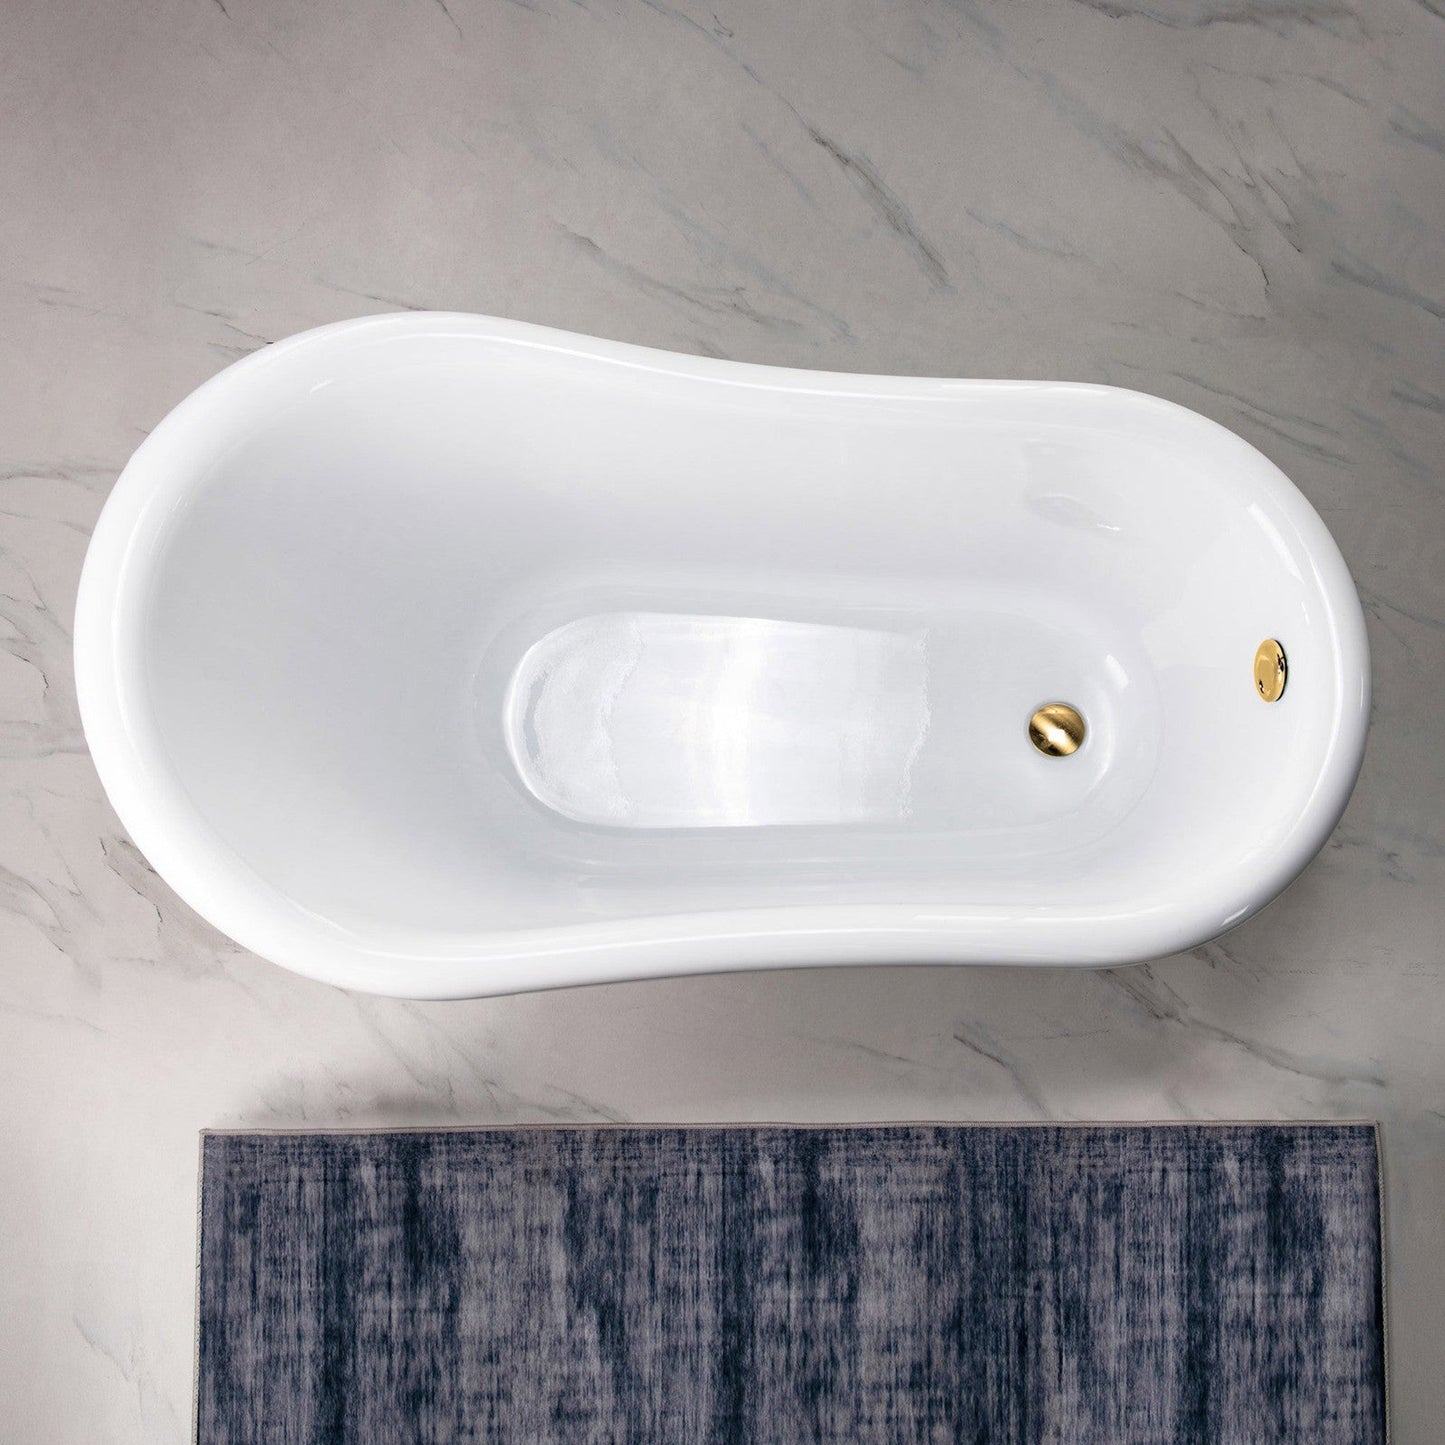 WoodBridge 54" White Acrylic Slipper Clawfoot Bath Tub With Polished Gold Feet, Drain, Overflow, F-0019PG Tub Filler and Caddy Tray